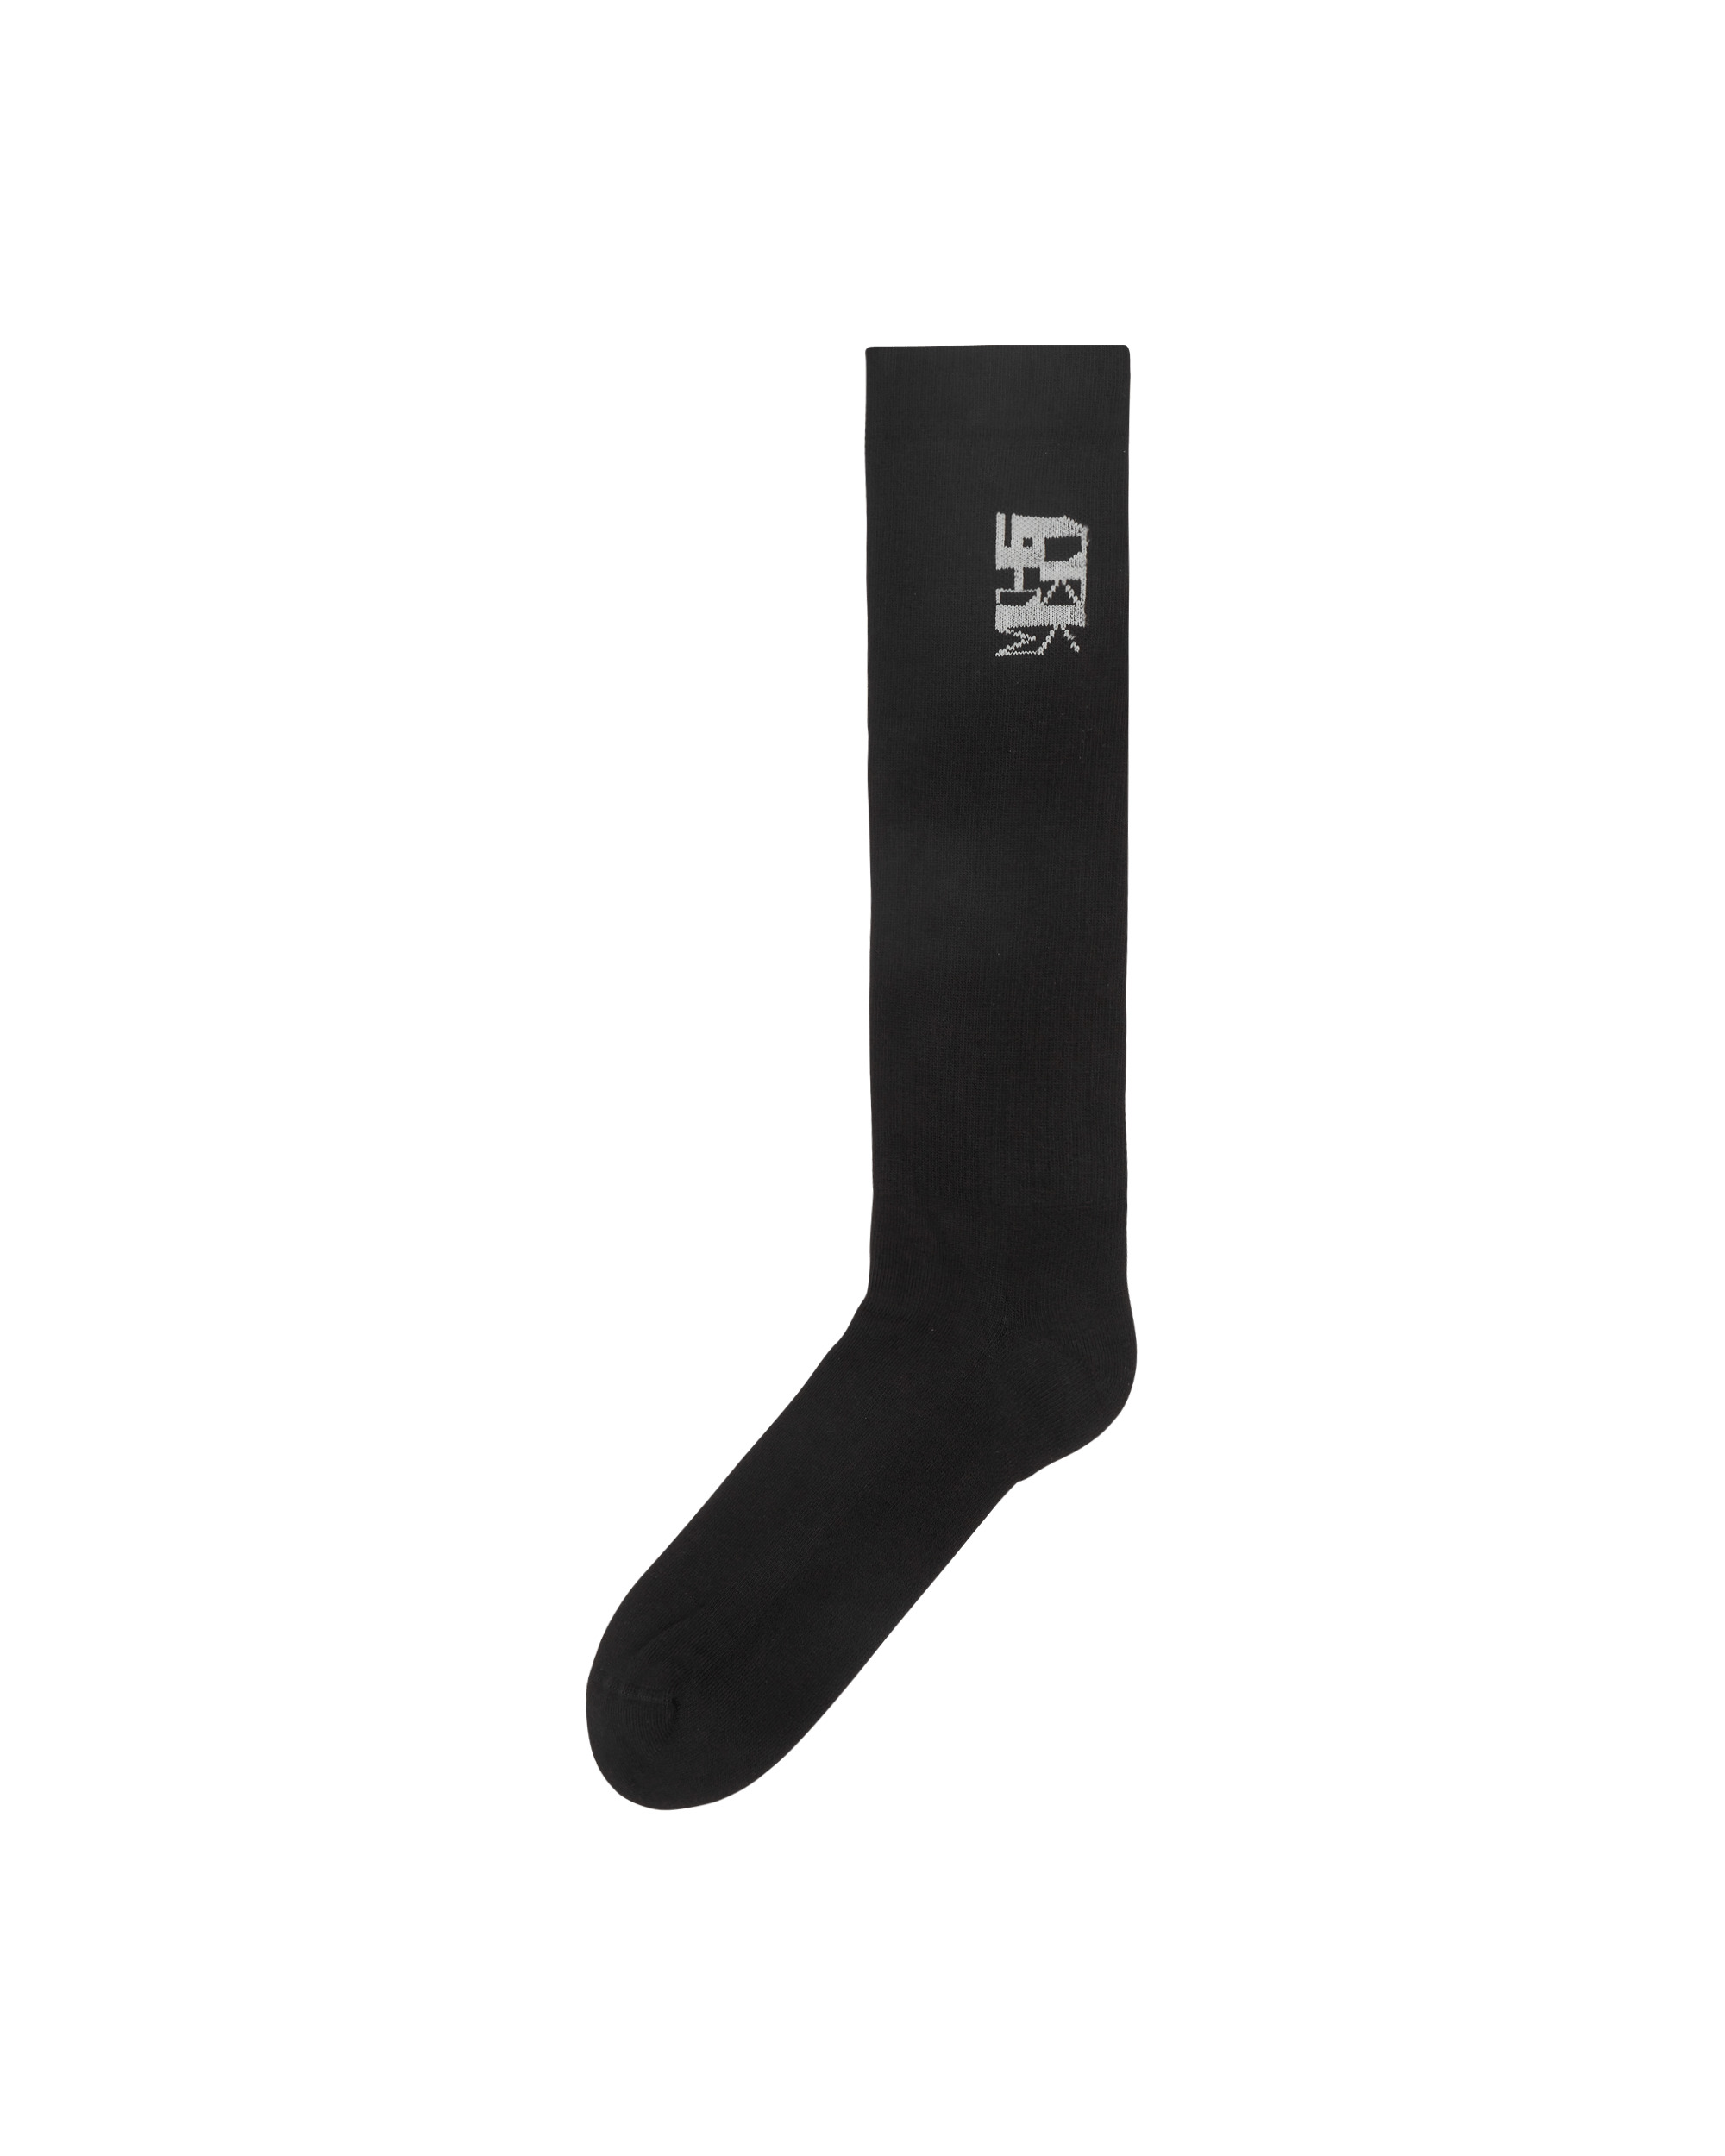 Cotton Socks Black - 2